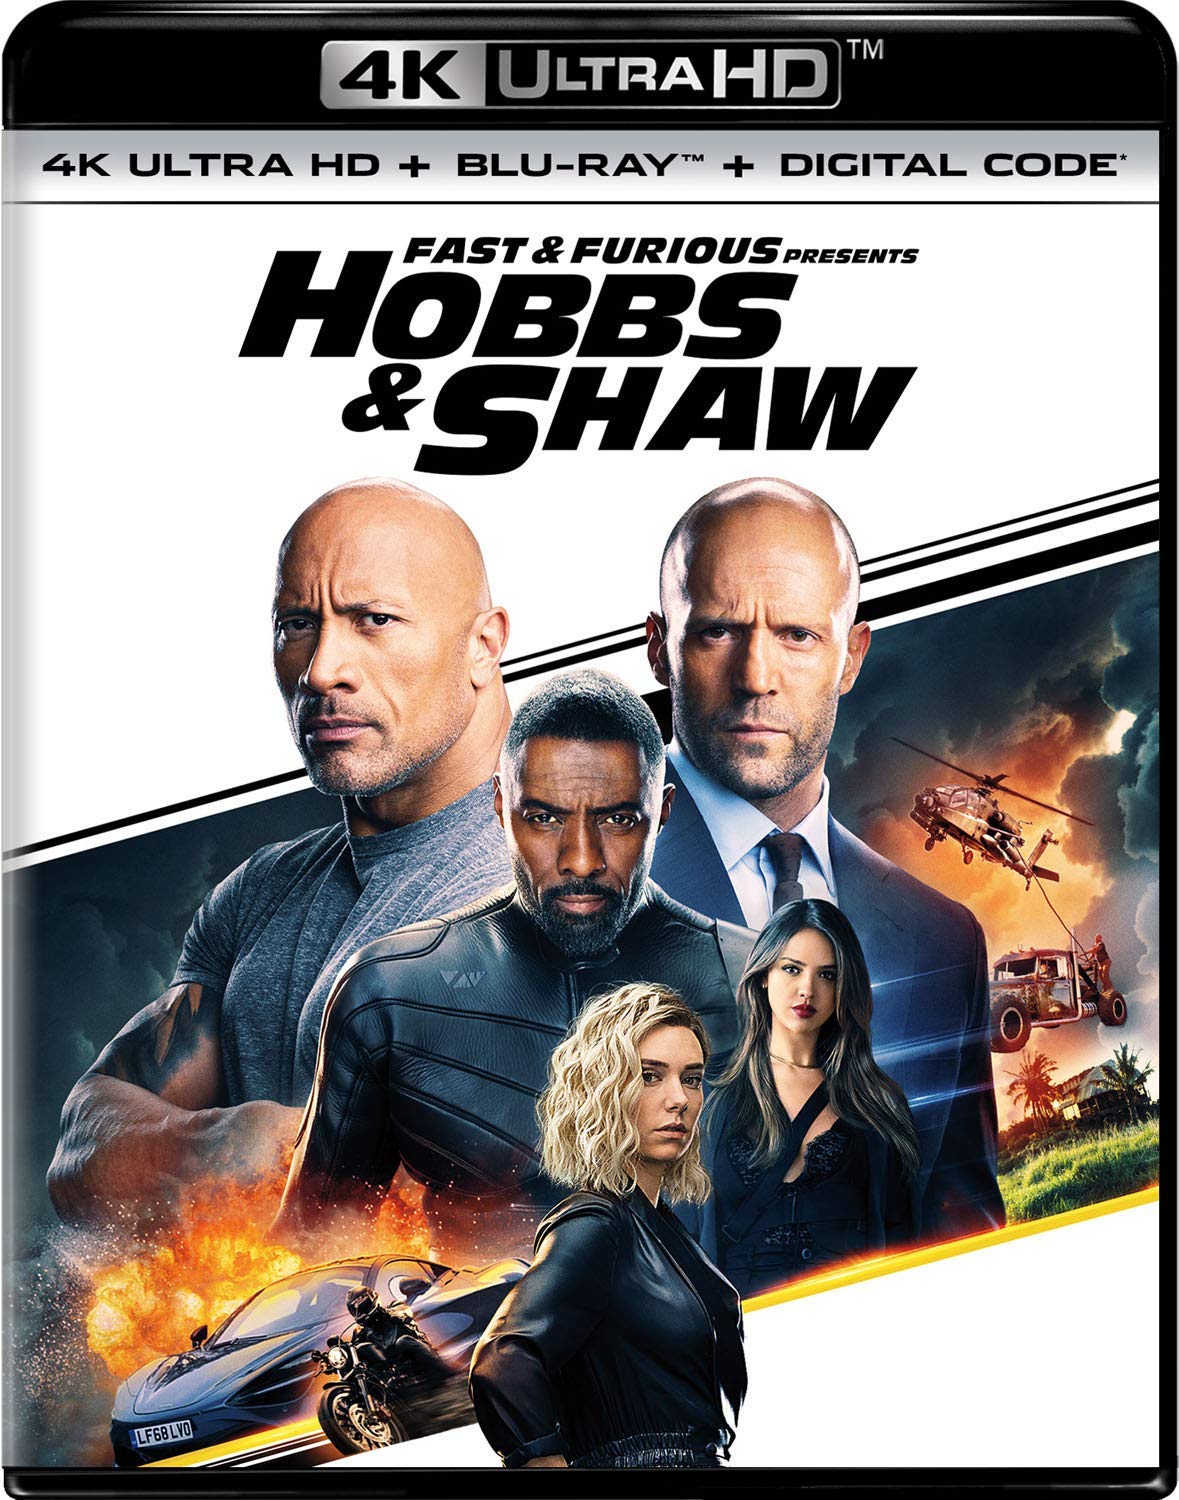 Fast & Furious : Hobbs & Shaw 2019 (4K ULTRA HD)